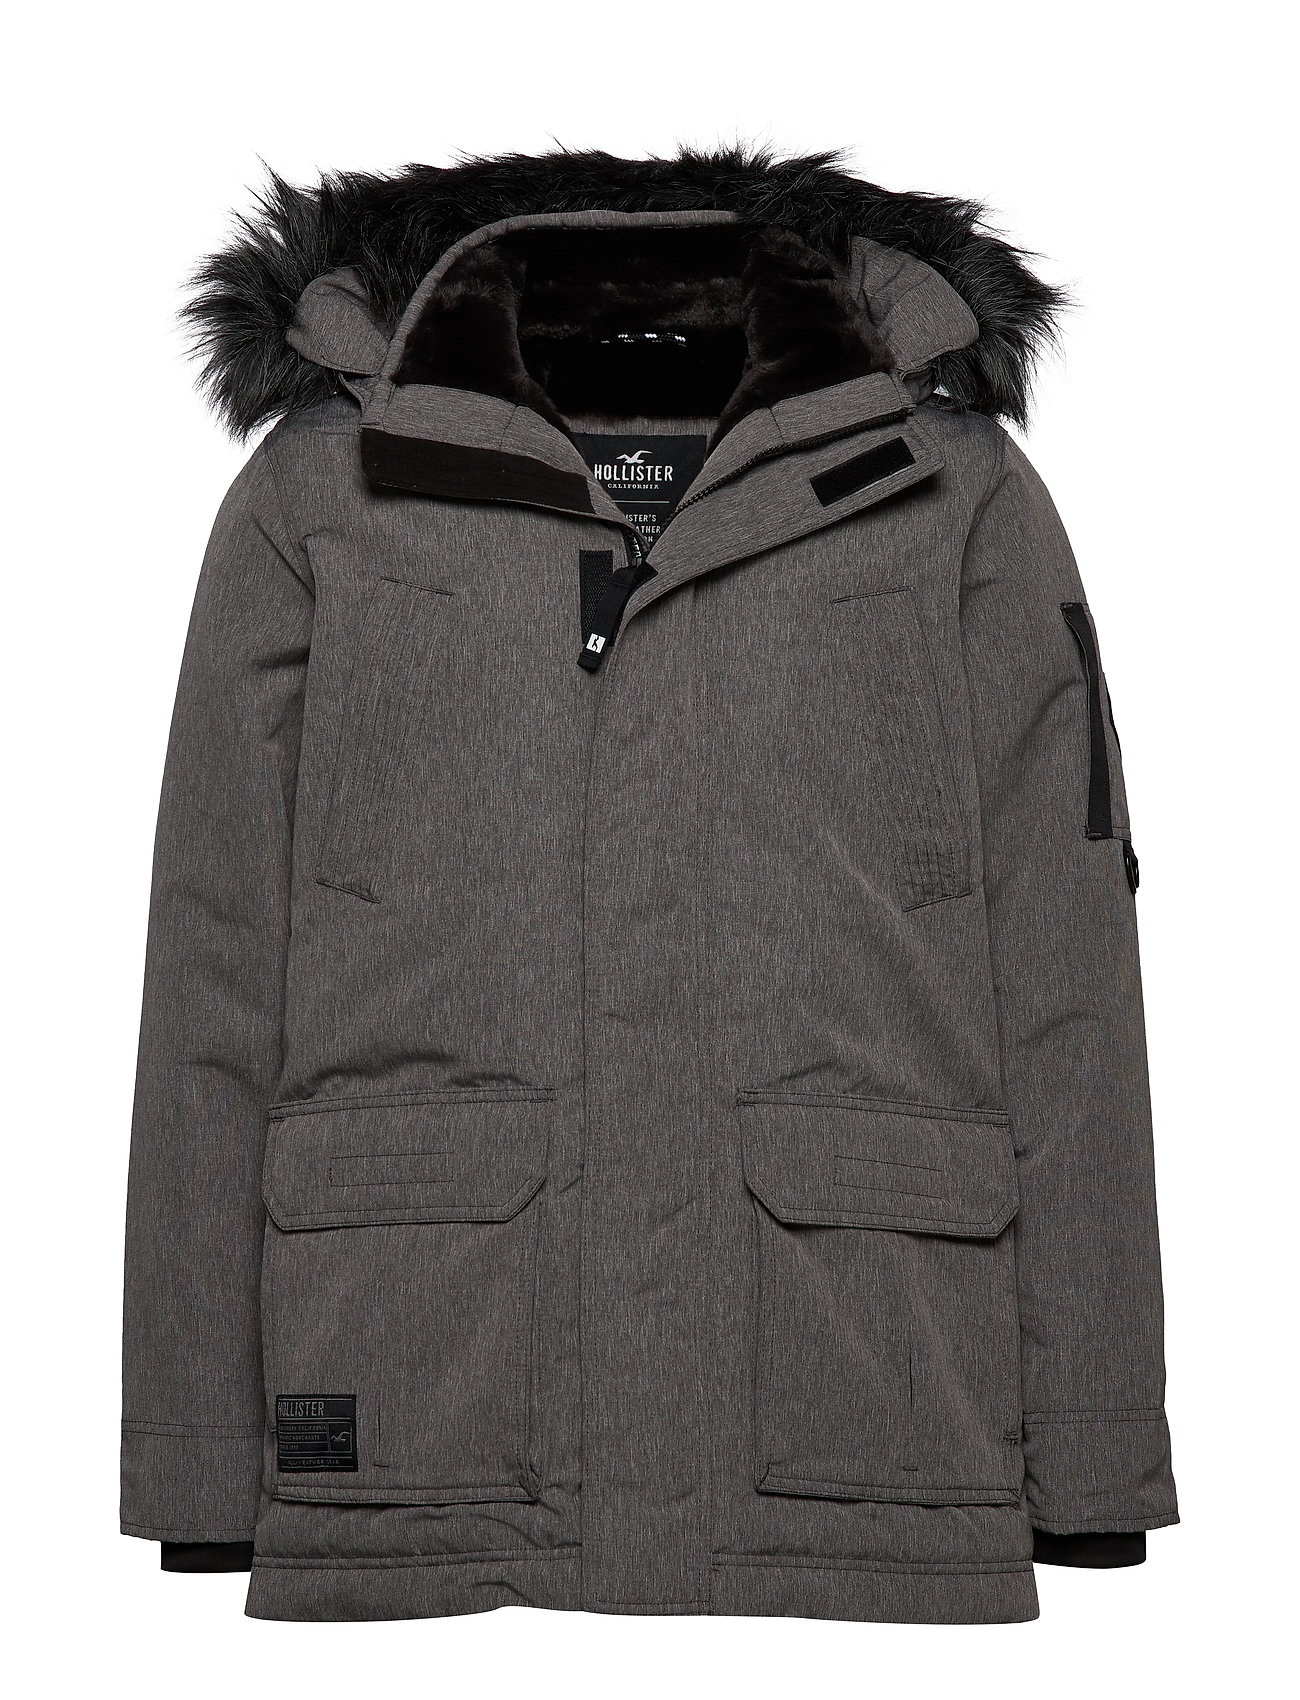 grey hollister coat Cheaper Than Retail 